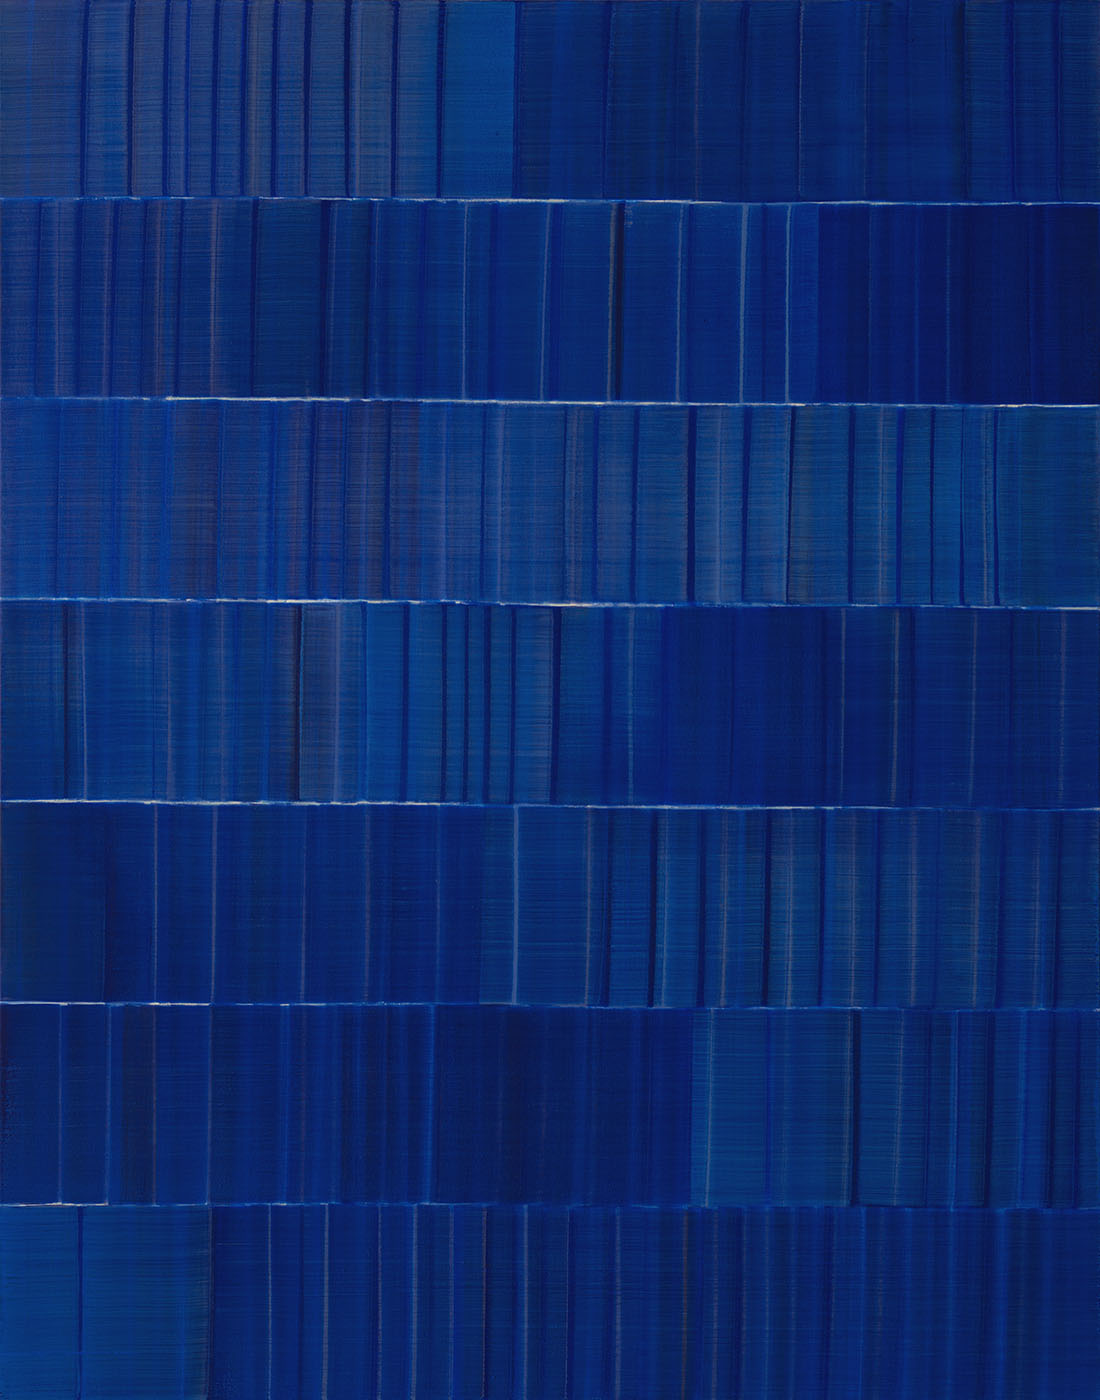 Nikola Dimitrov, FarbKlangBlau V, 2019, Pigmente, Bindemittel auf Leinwand, 140 × 110 cm